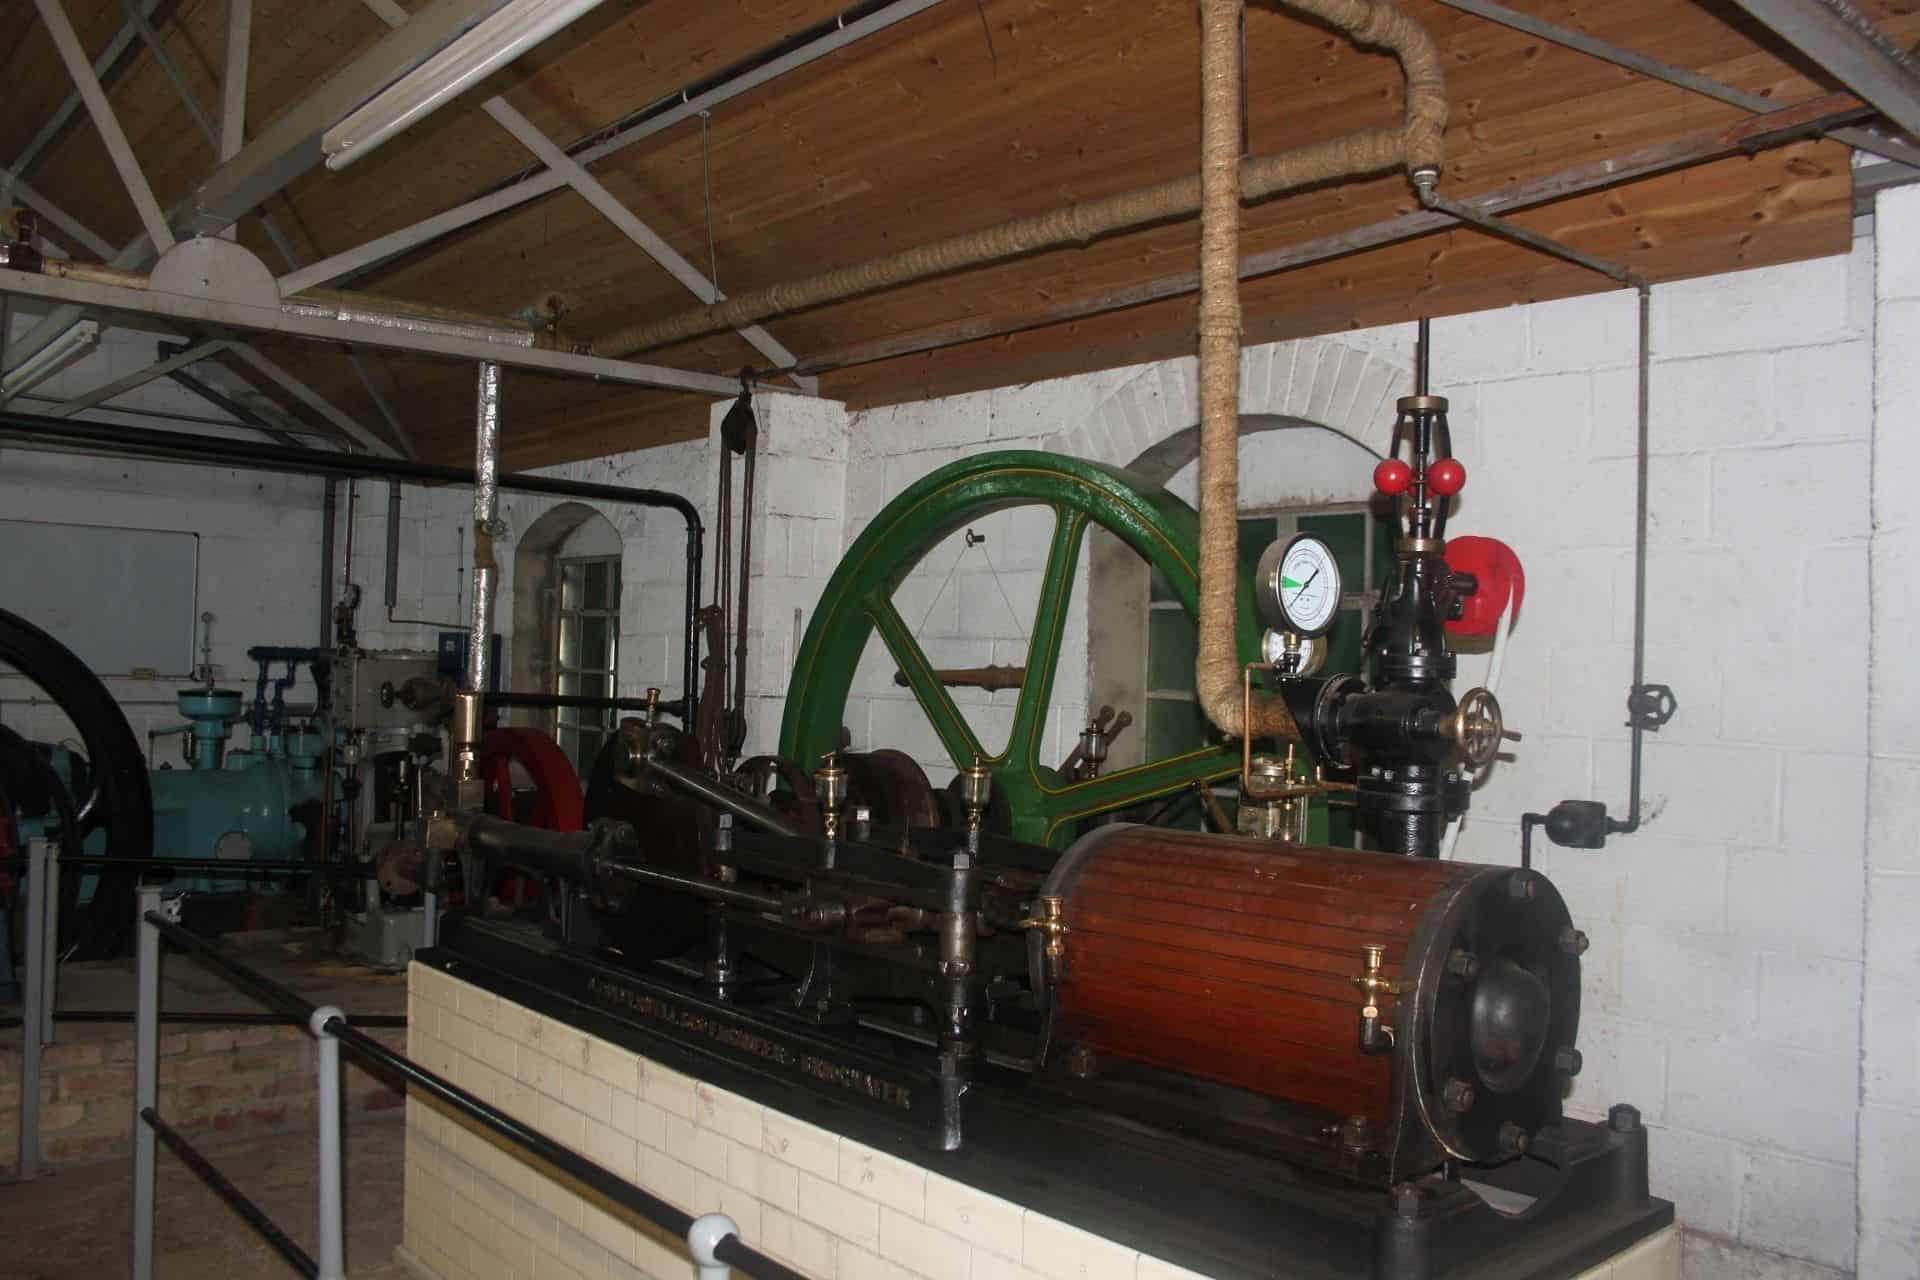 Westonzoyland Pumping Station Museum in UK